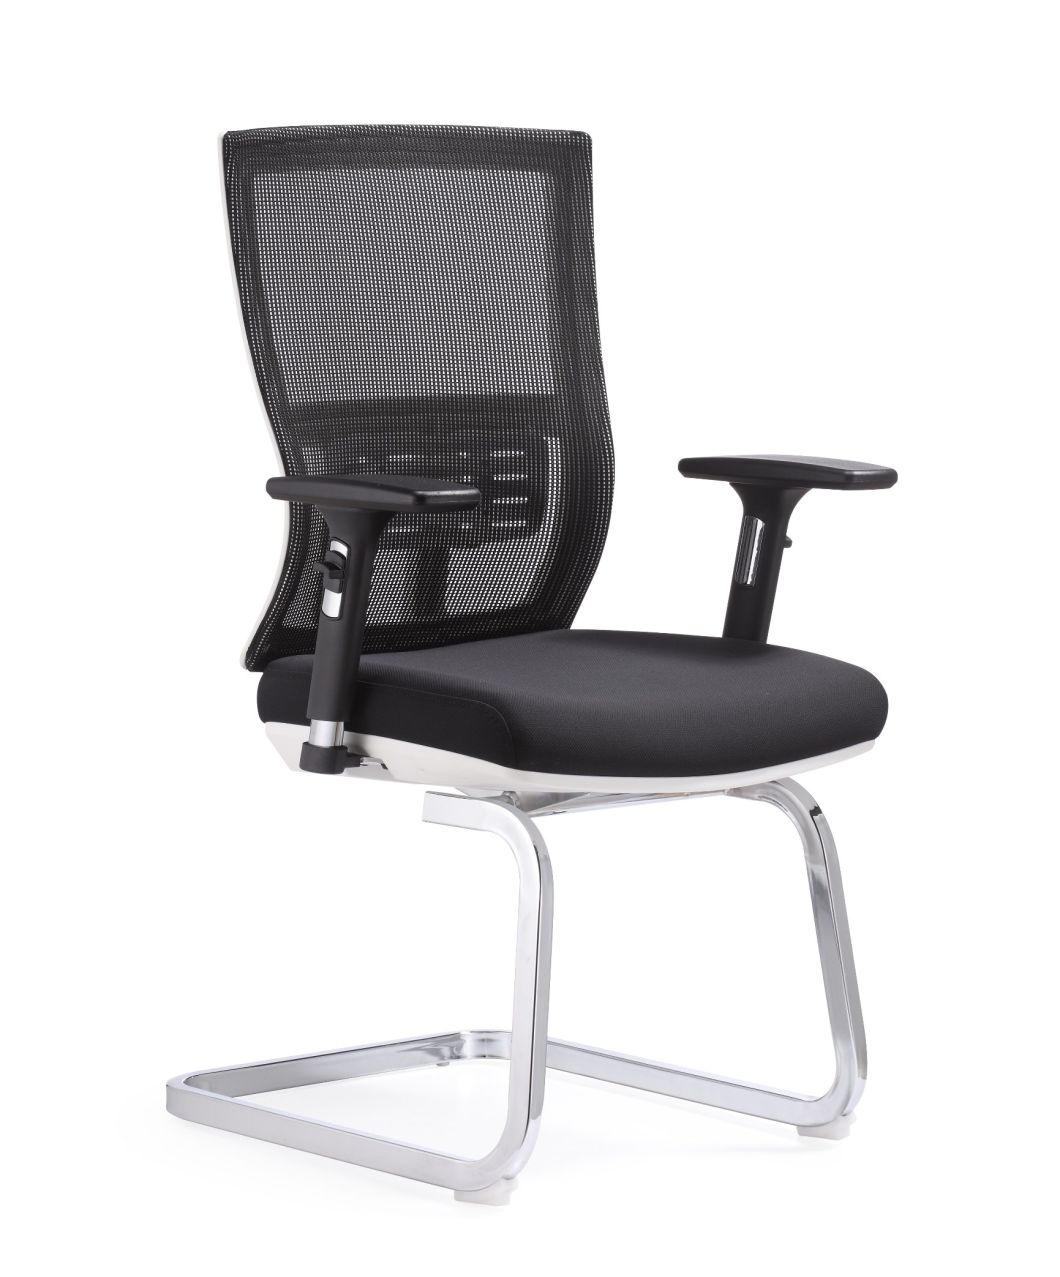 Ergonomic High Back Computer Desk Mesh Office Chair